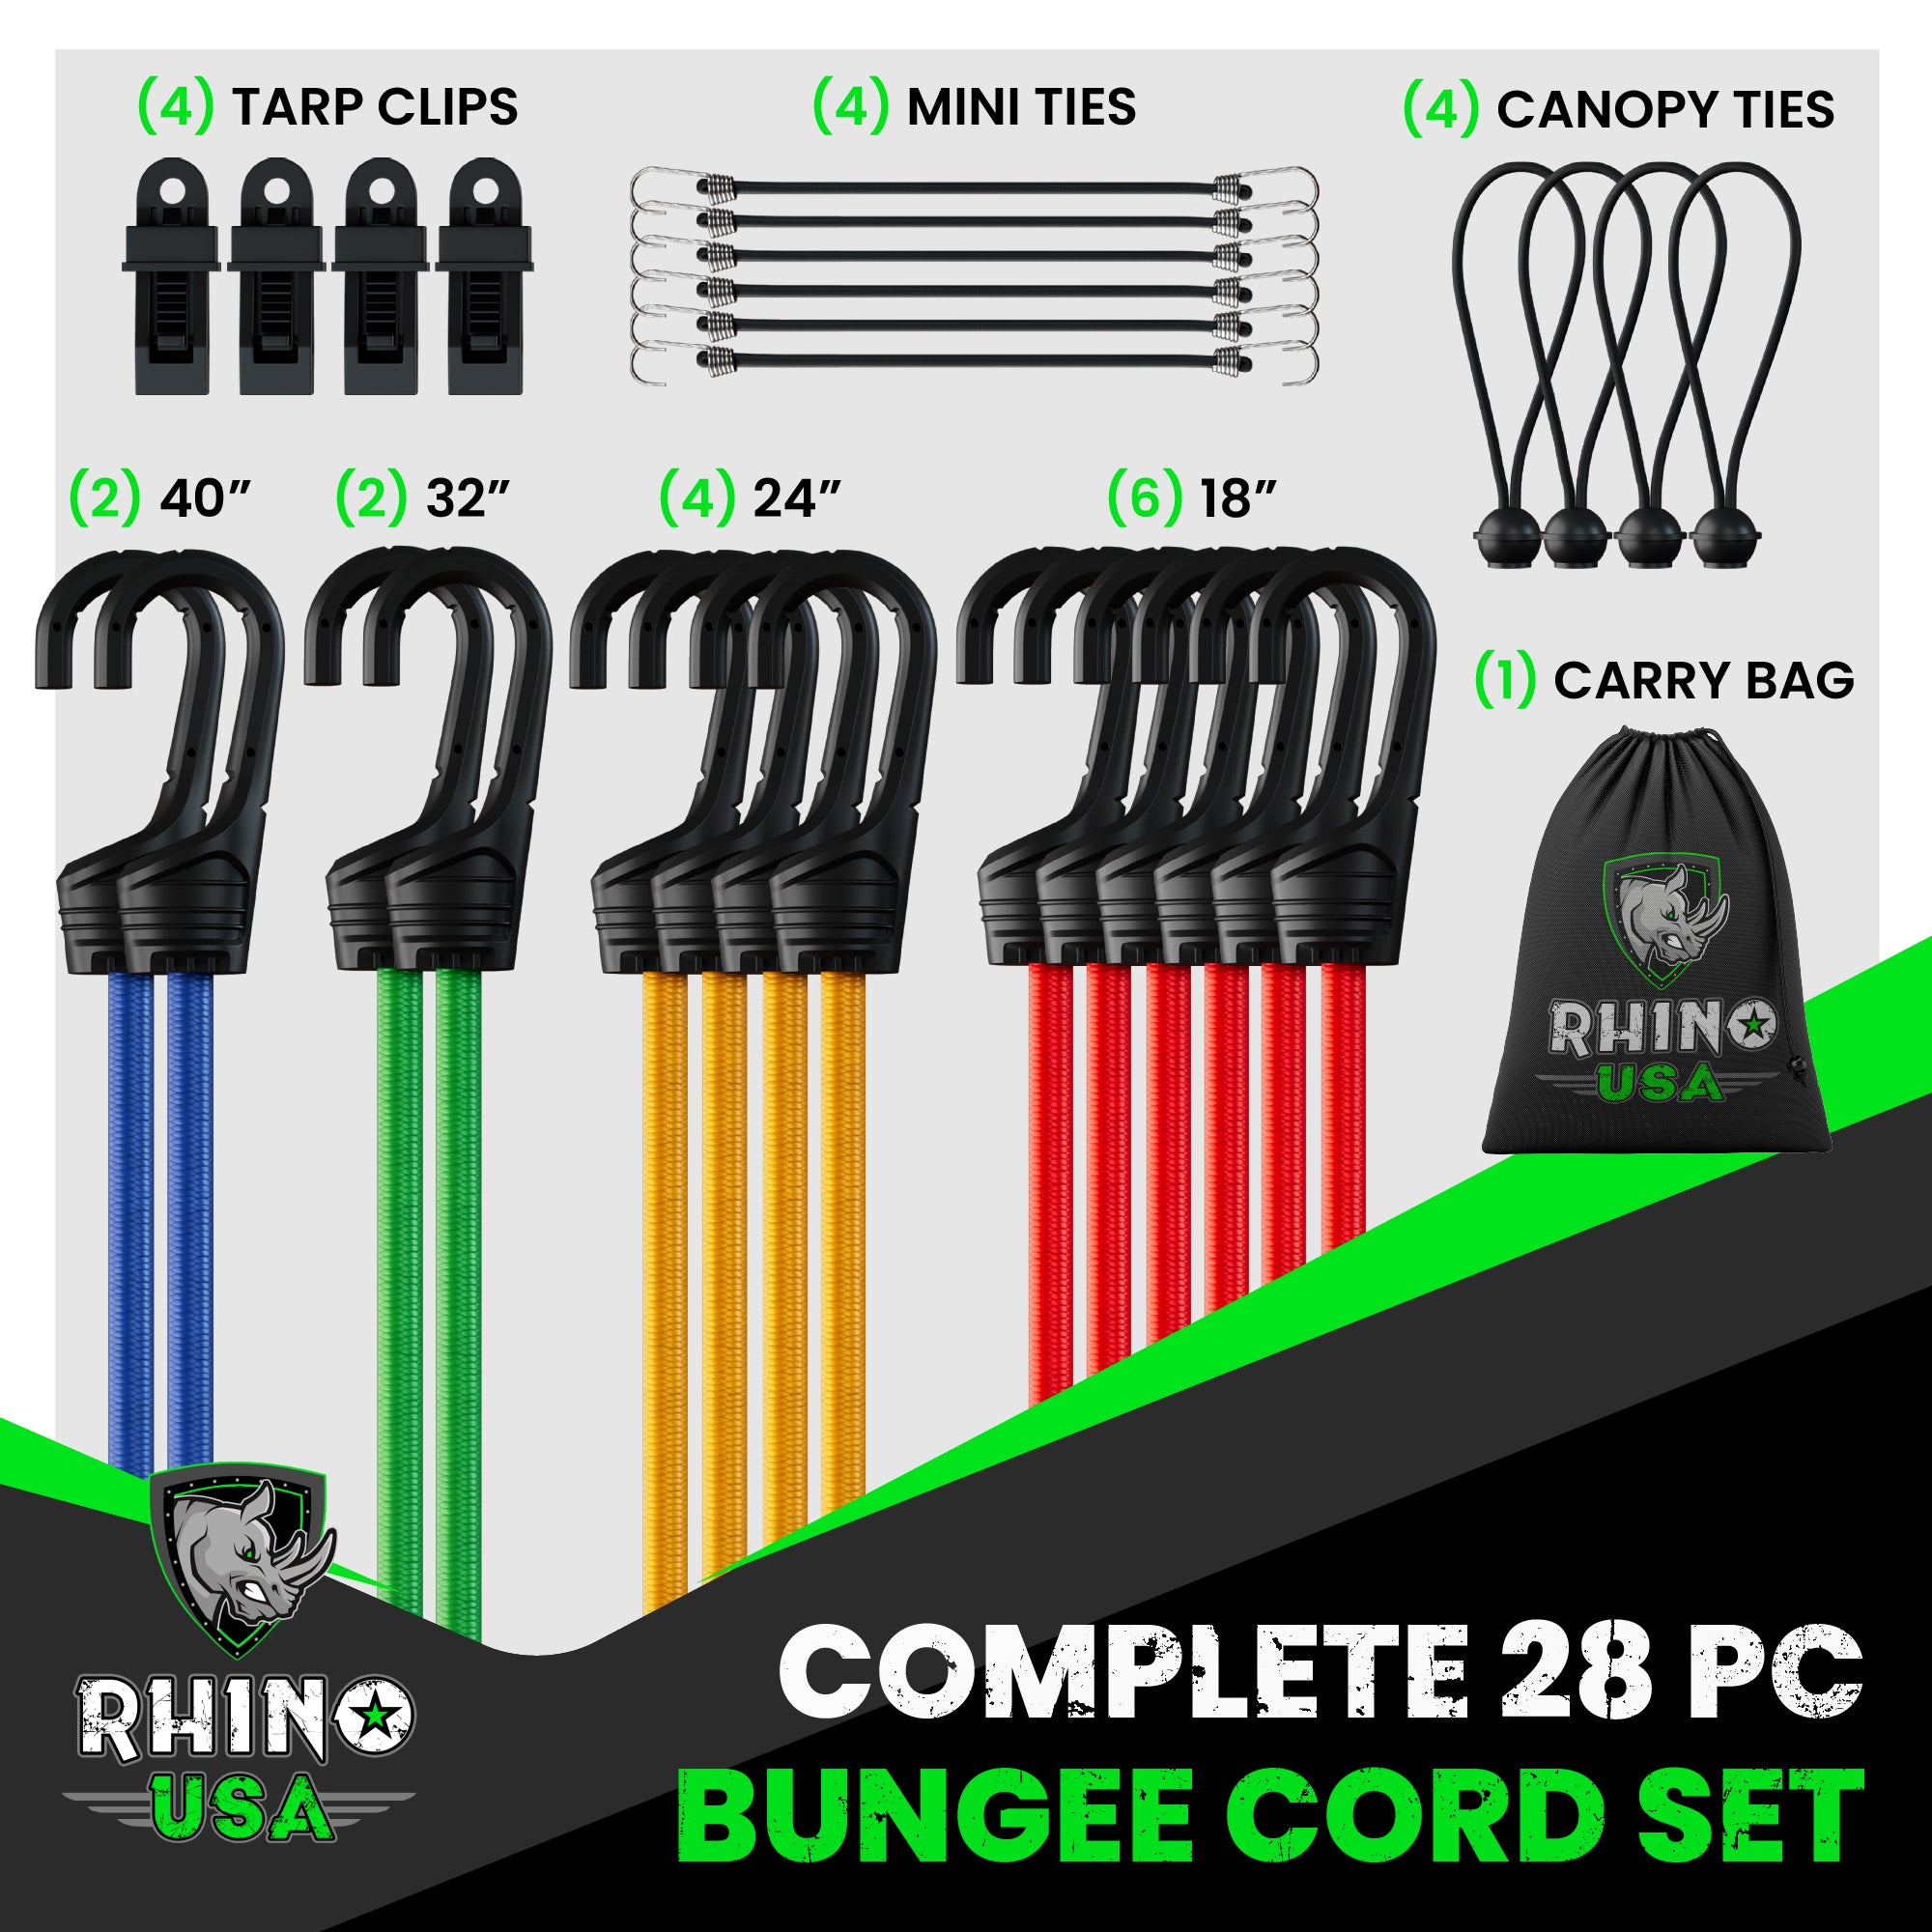 Rhino USA Bungee Cords with Hooks 28pc Heavy Duty Assortment 4 Free Tarp